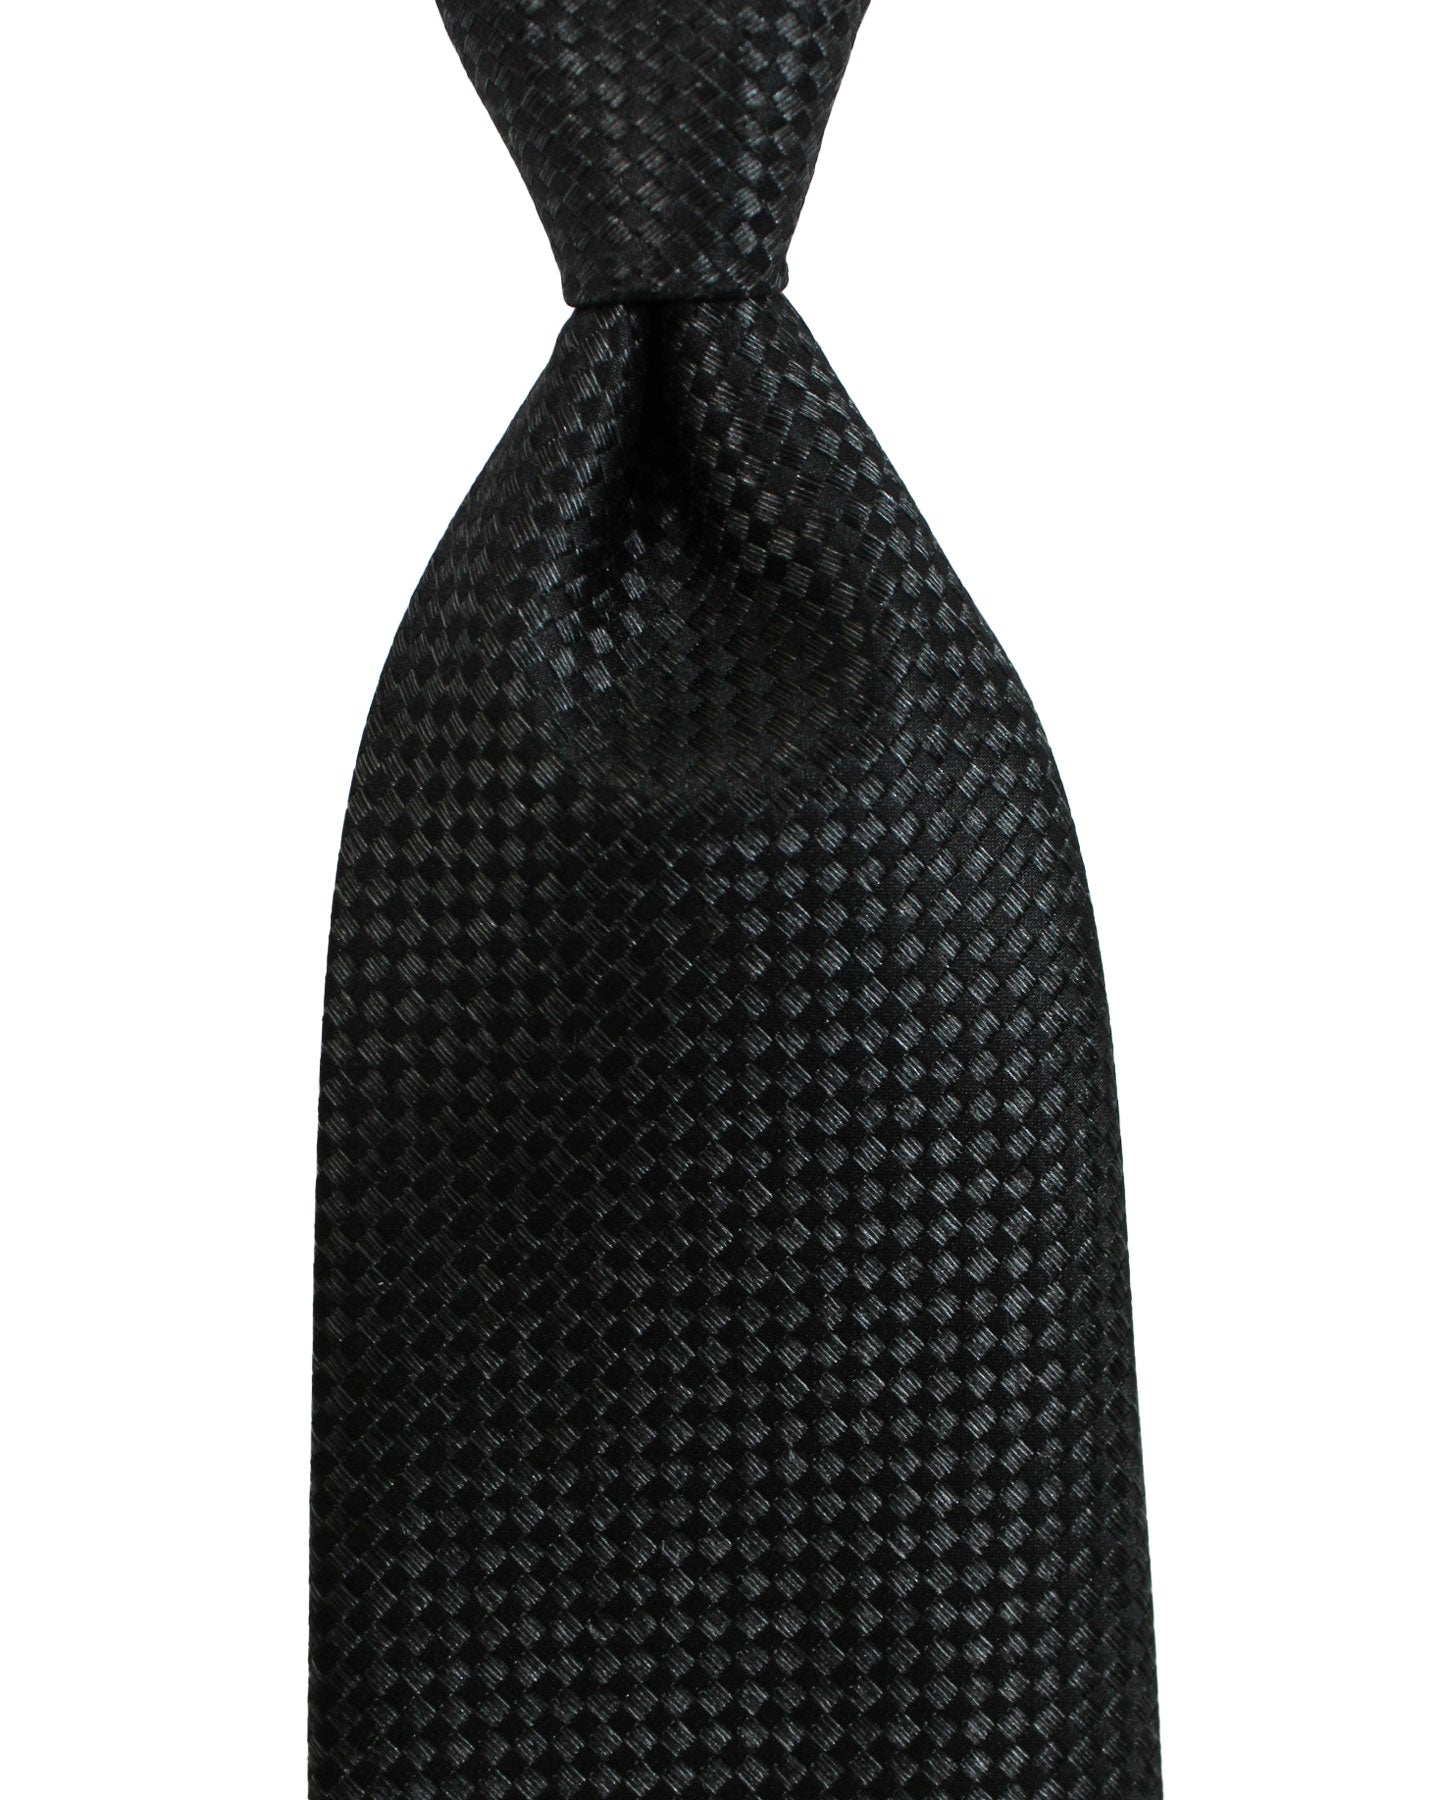 Tom Ford Silk Tie Gray Black Micro Pattern